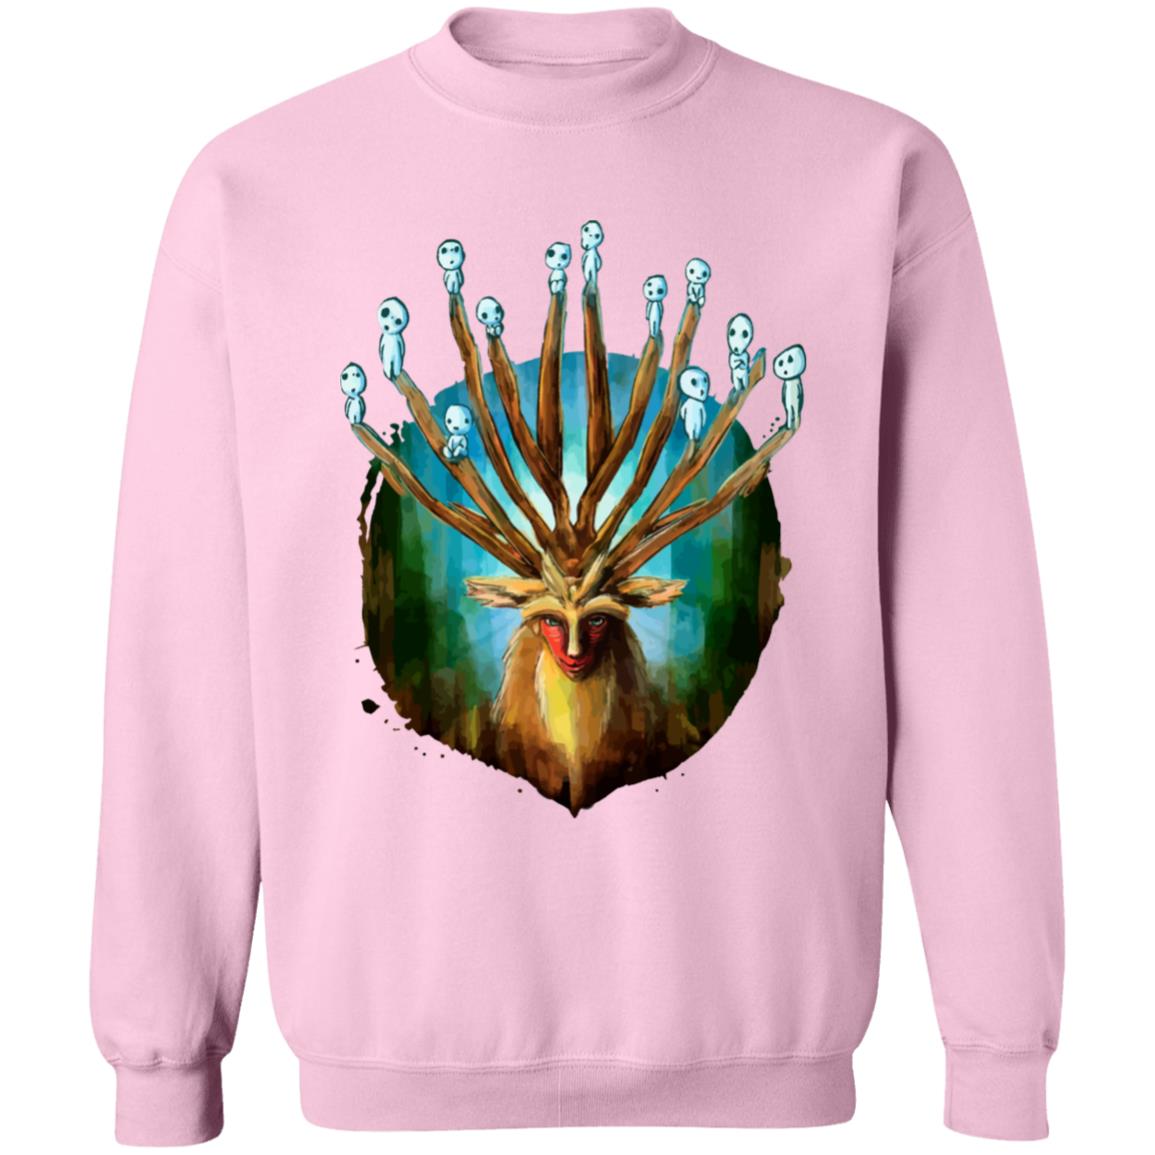 Princess Mononoke – Shishigami and The Tree Spirit Sweatshirt